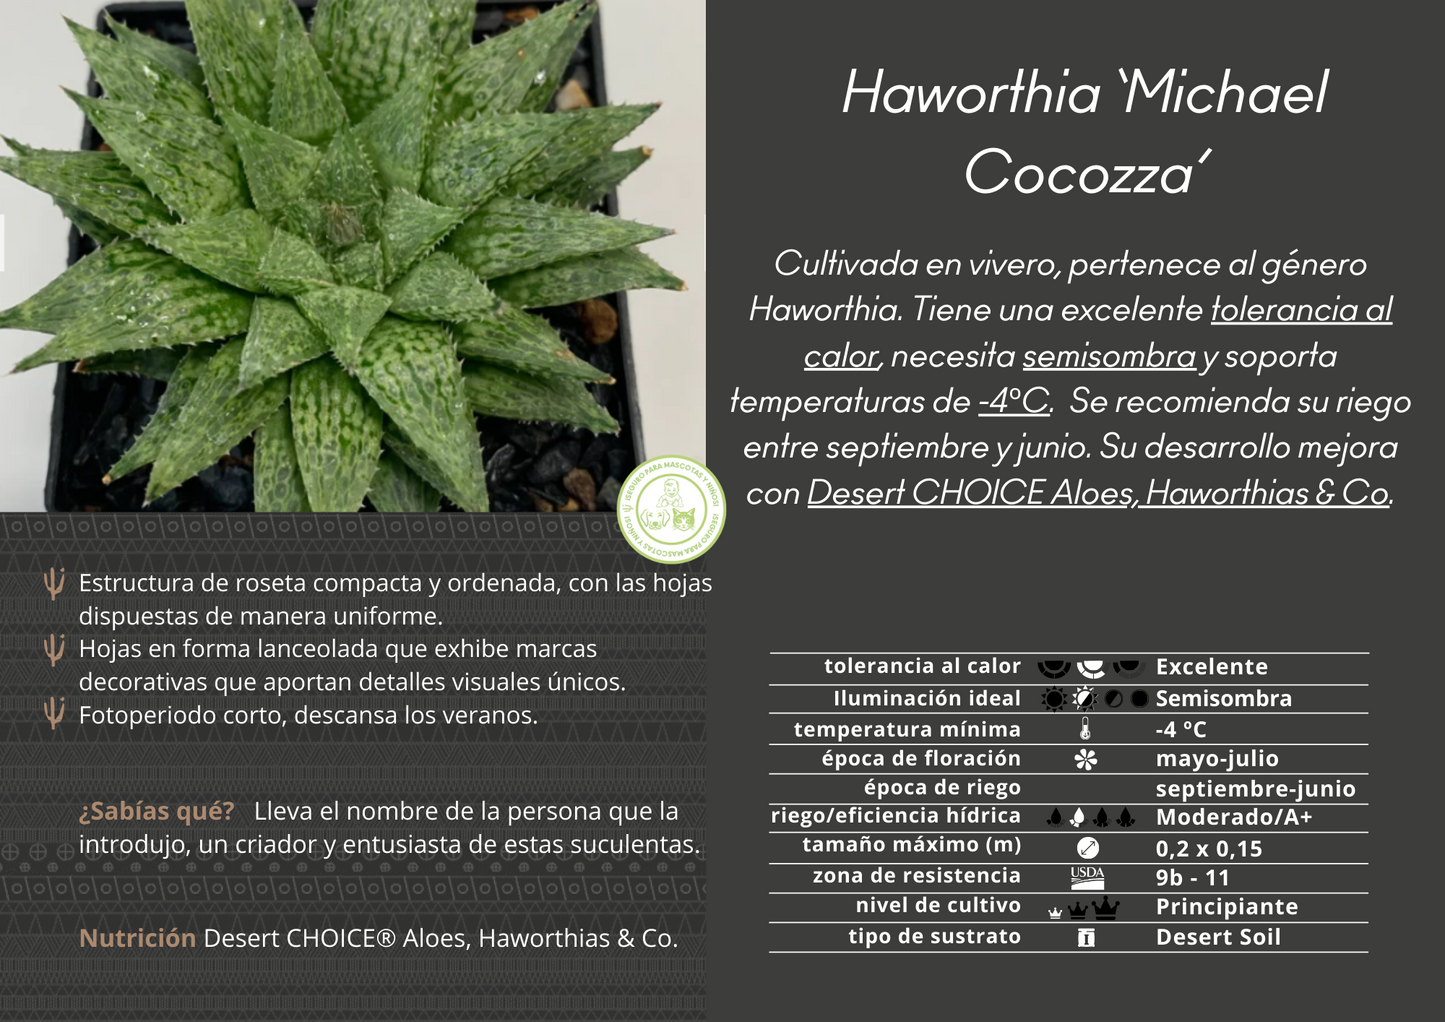 Haworthia Michael Cocozza